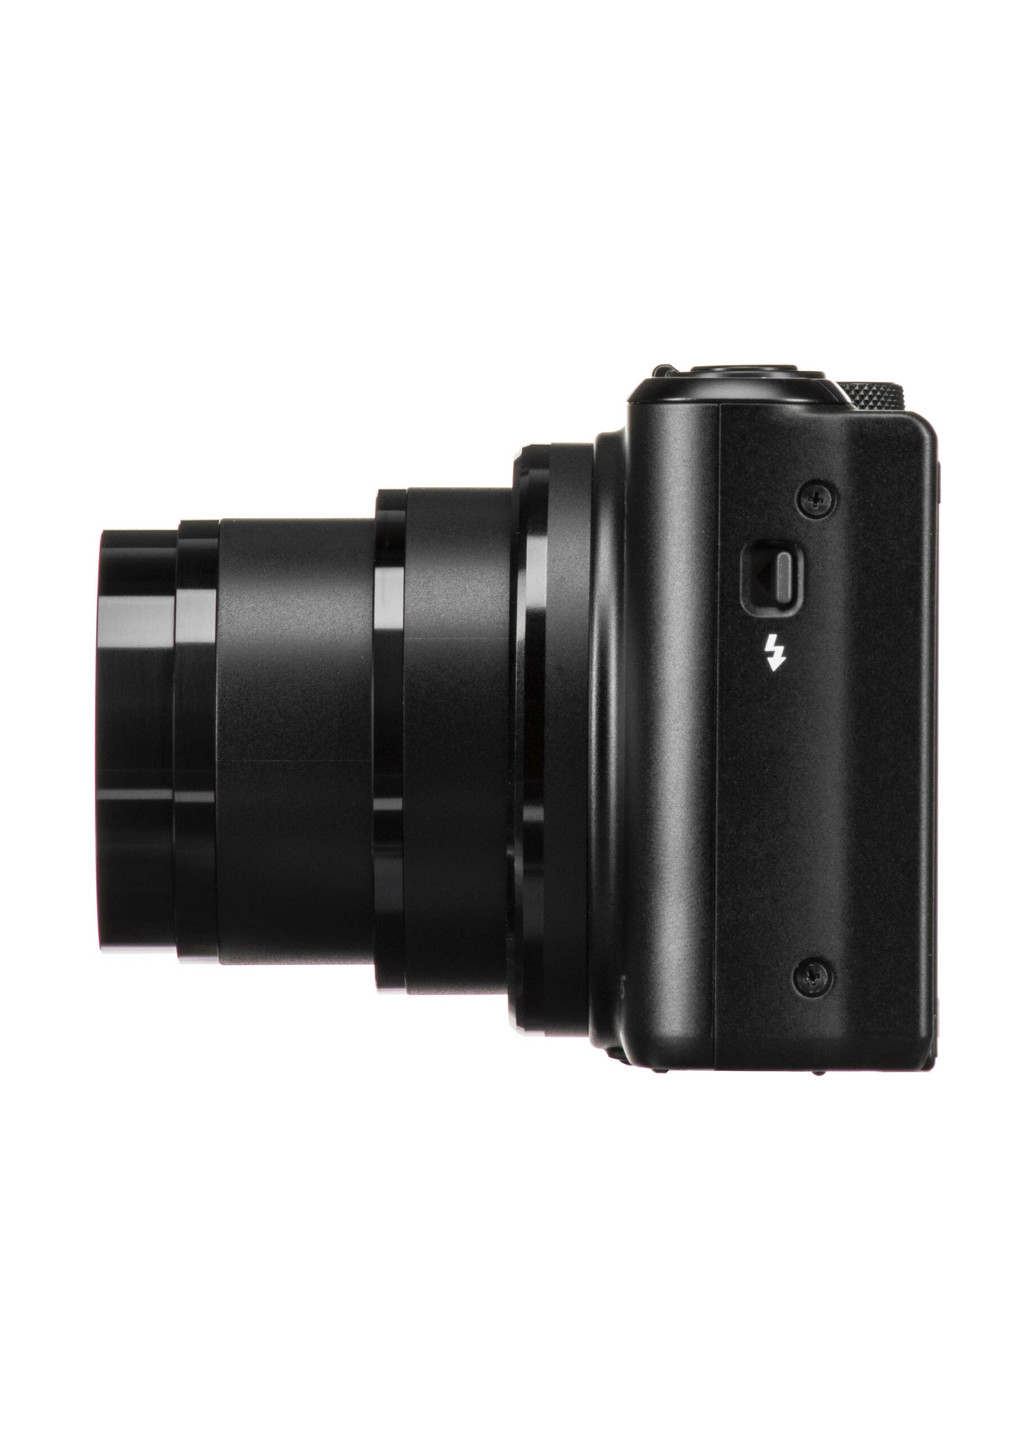 Компактна фотокамера Canon powershot sx740 hs black (130567464)